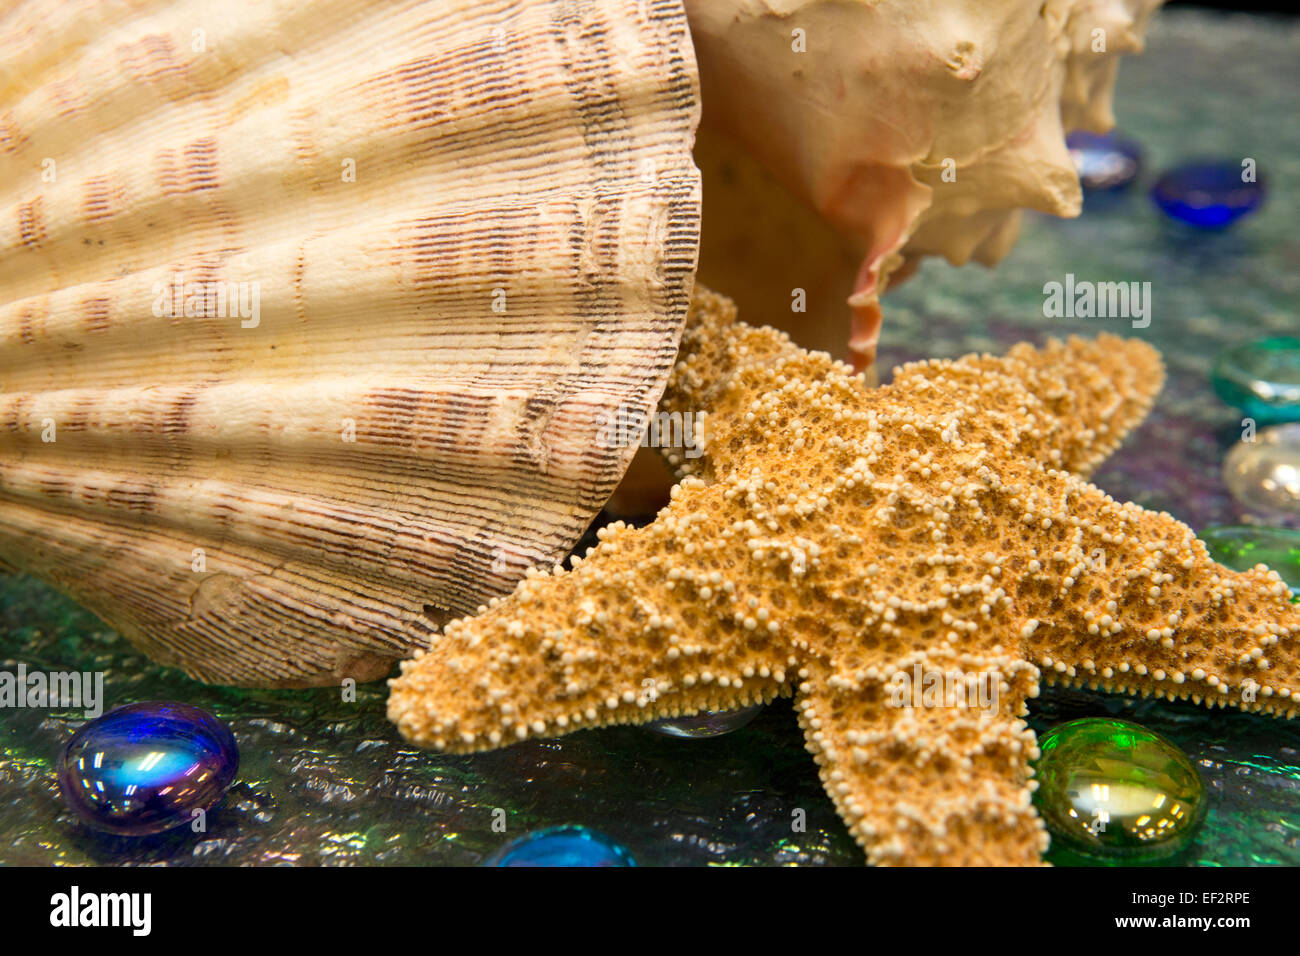 Starfish and scallop shell on a decorative mat Stock Photo